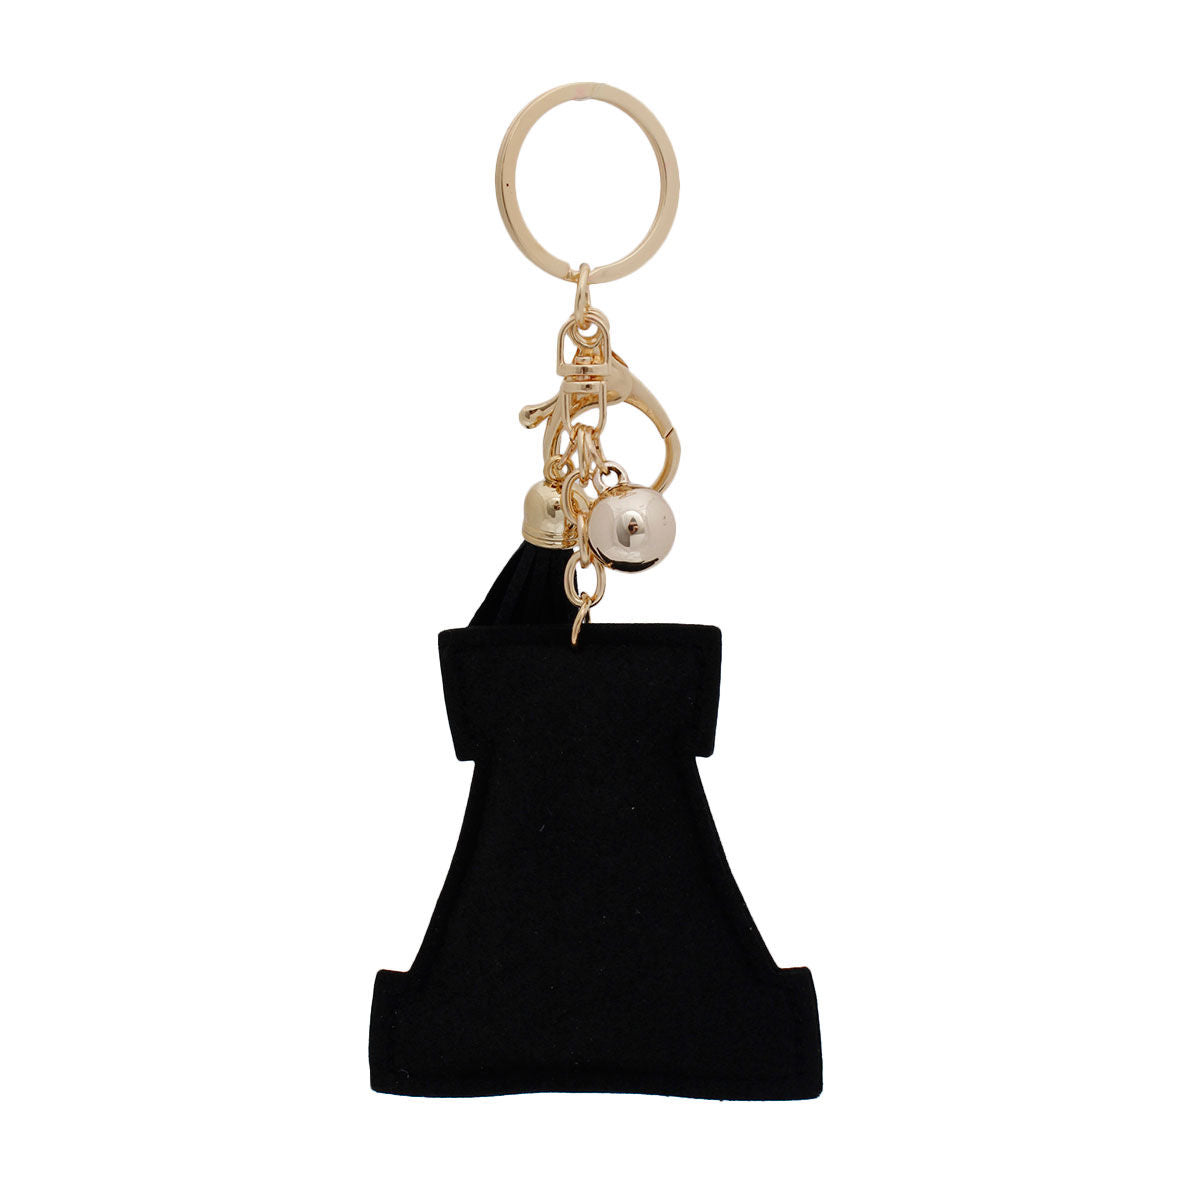 A Black Keychain Bag Charm